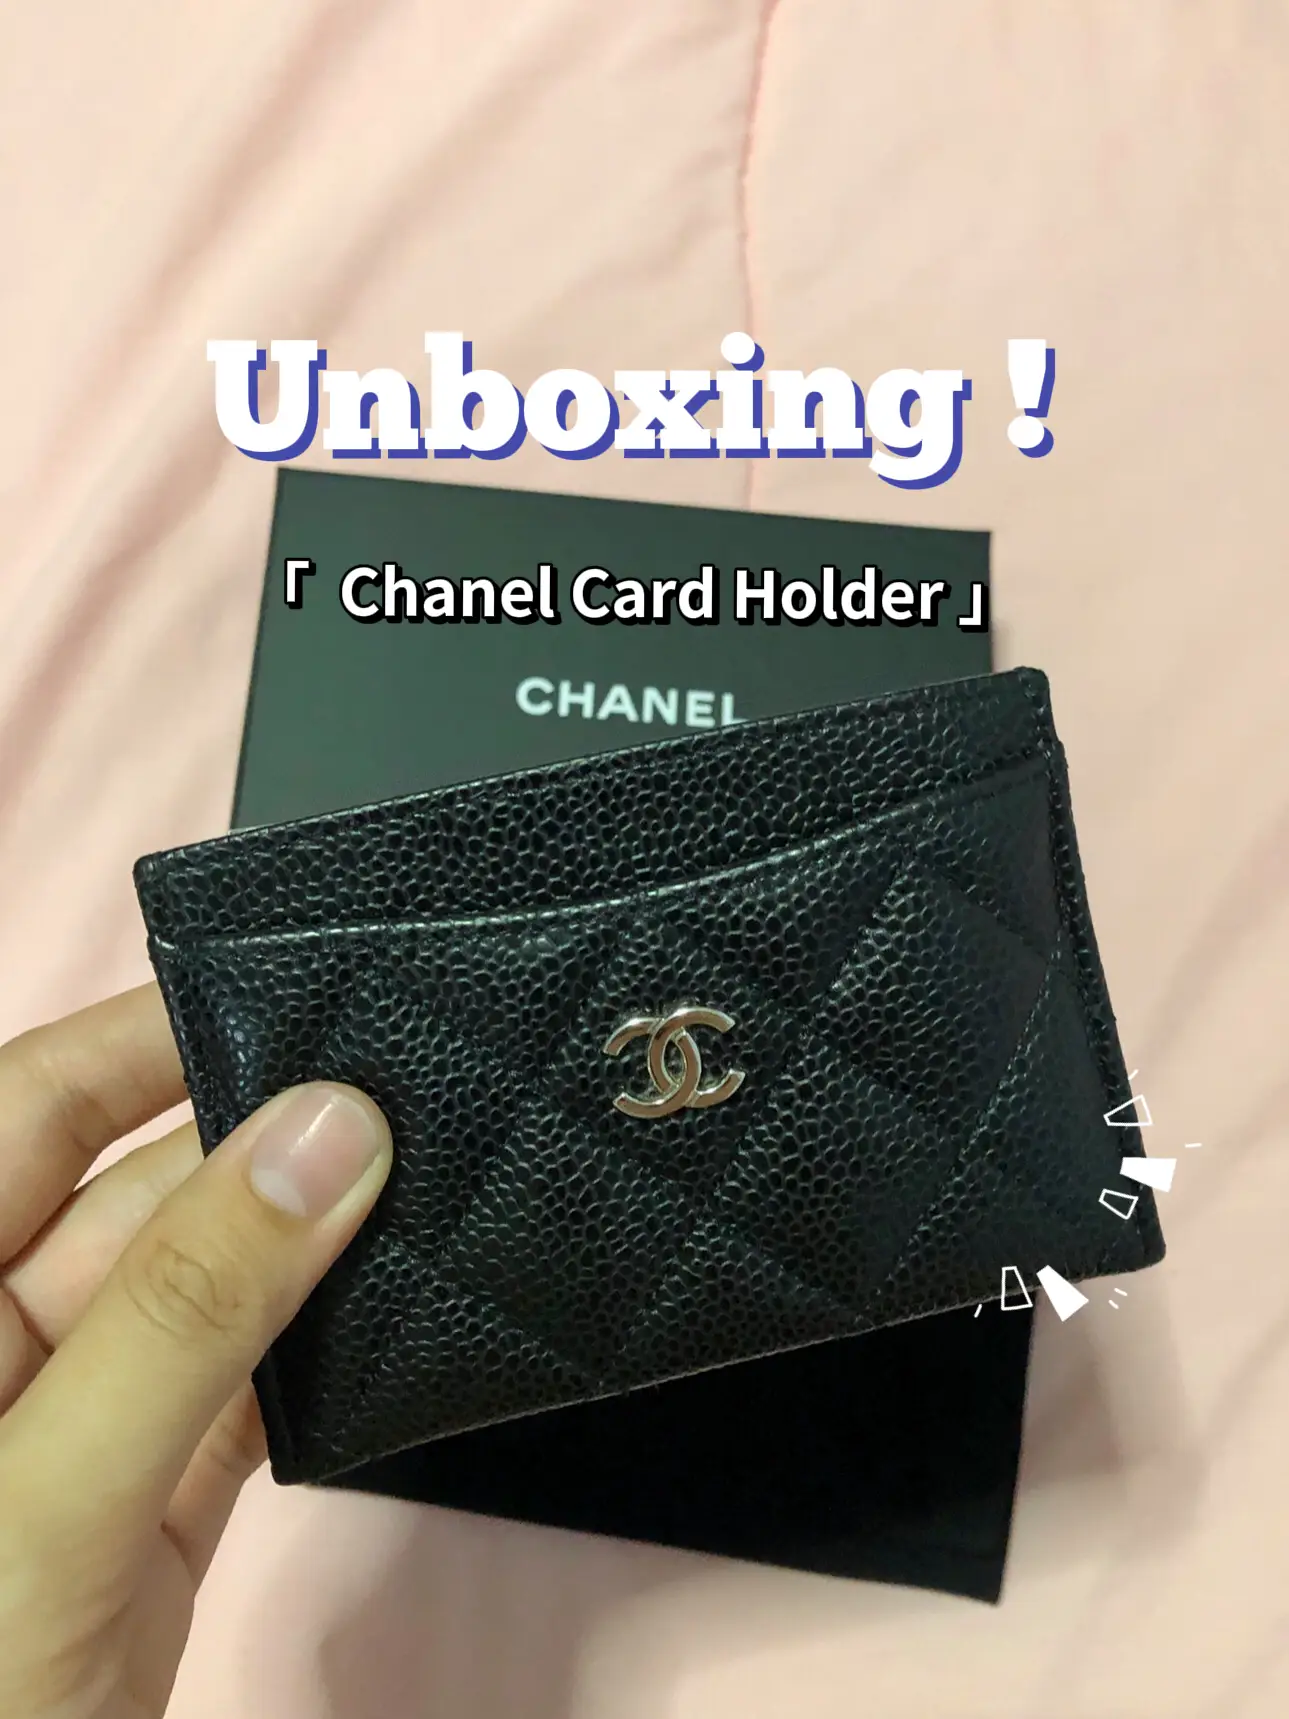 Chanel Cardholder Unboxed